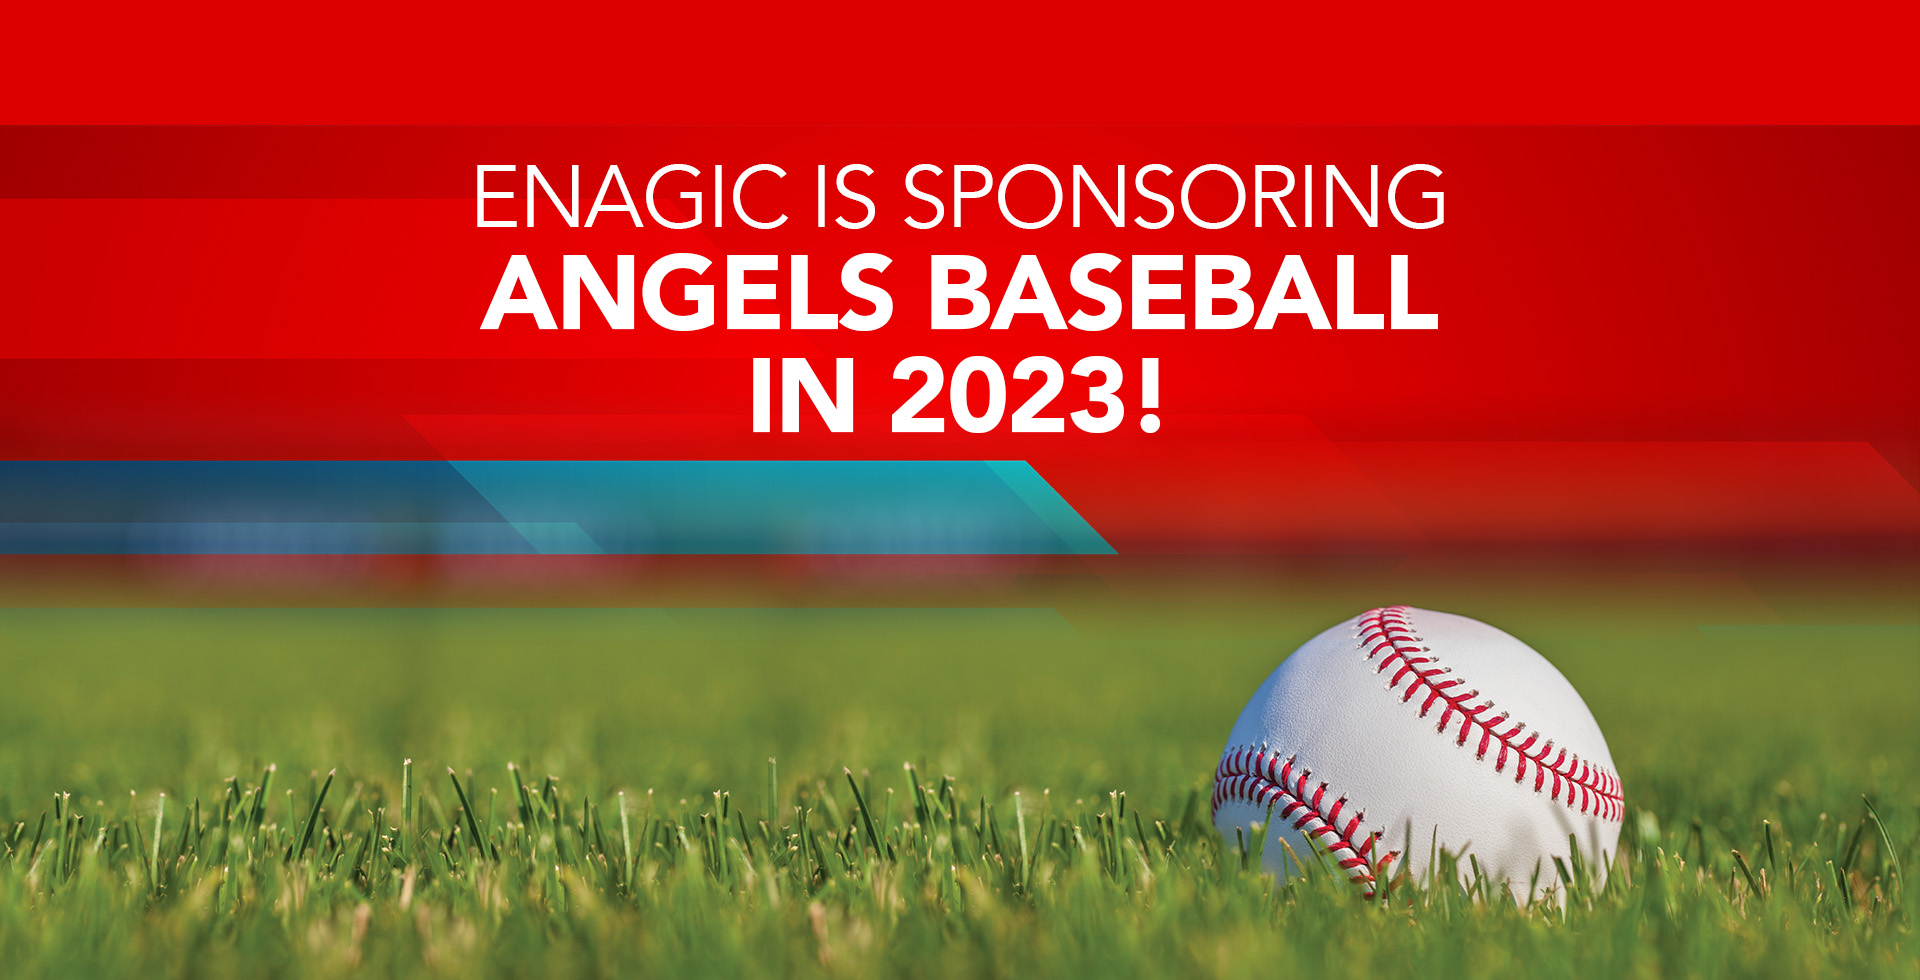 Enagic sponsoring the Angels